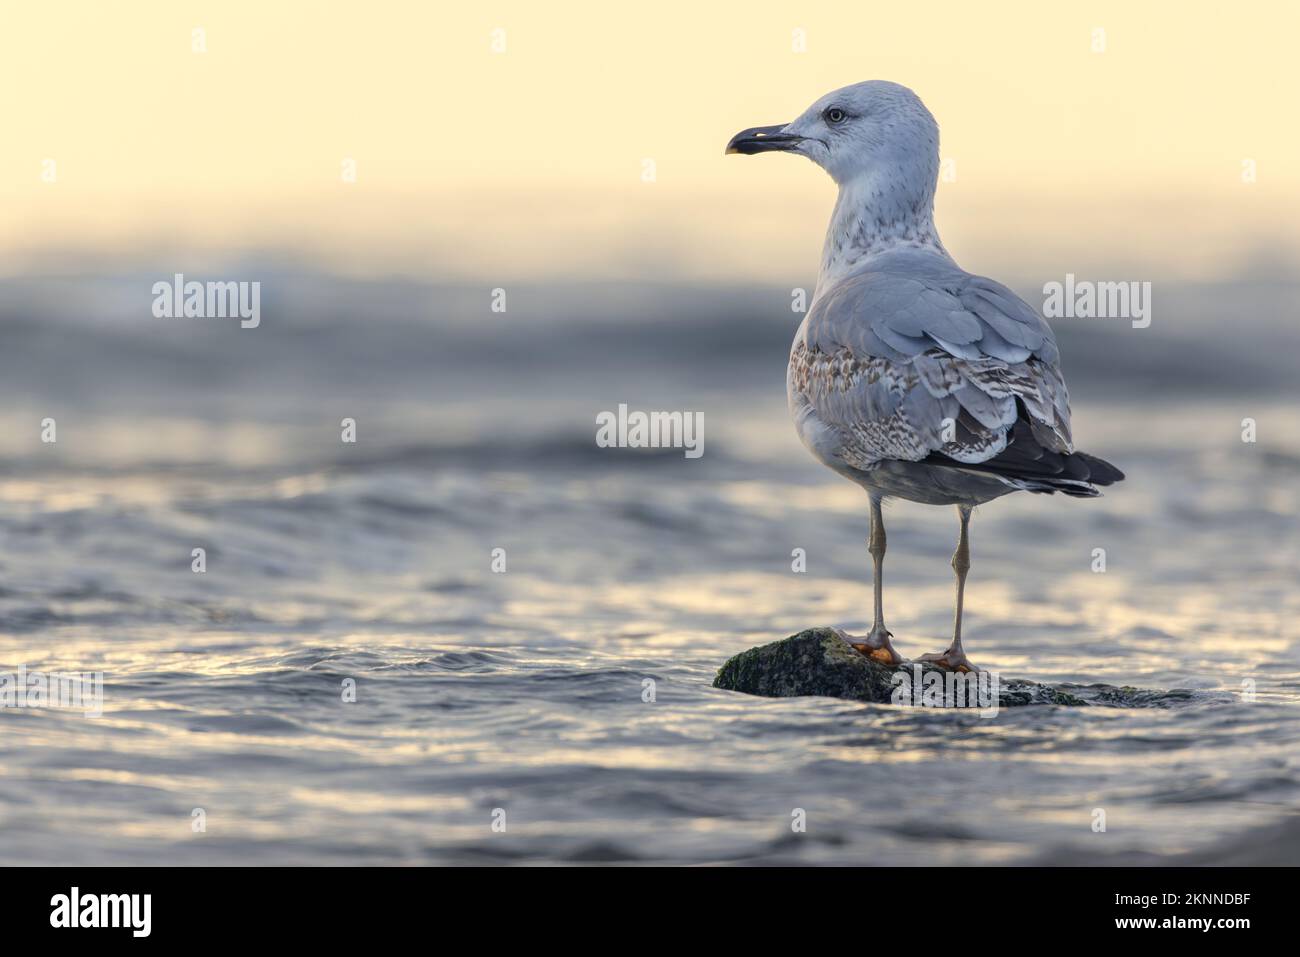 Seagull on the beach sand against the sea. Stock Photo